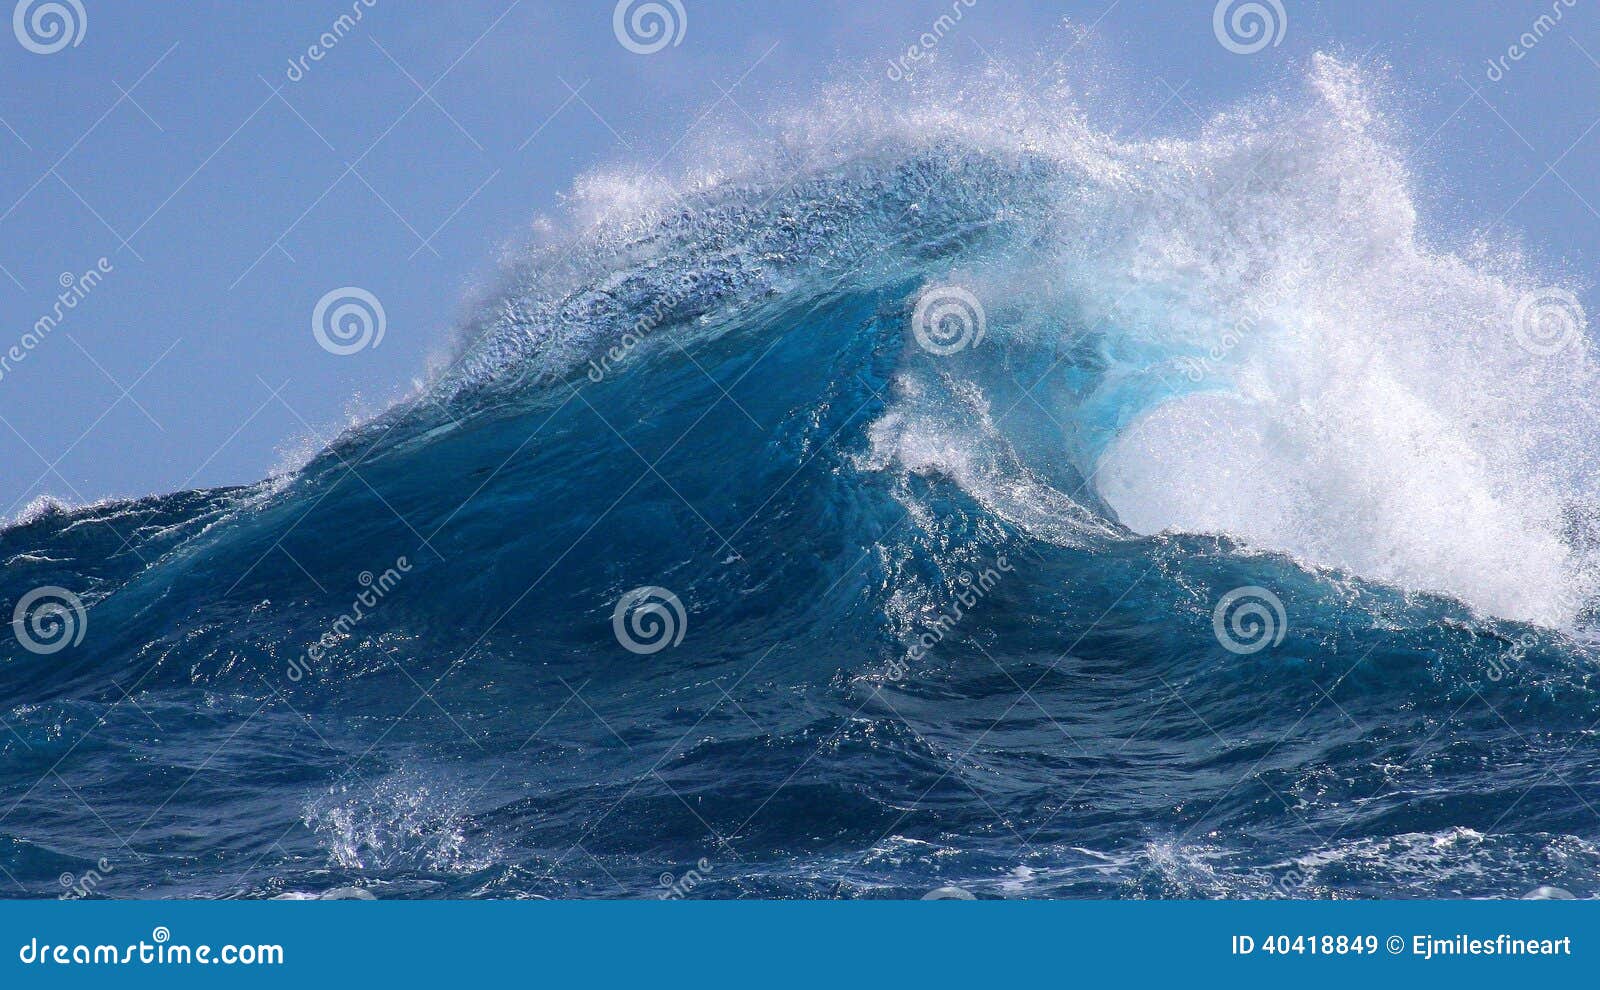 hawaii's tropical blue ocean waves